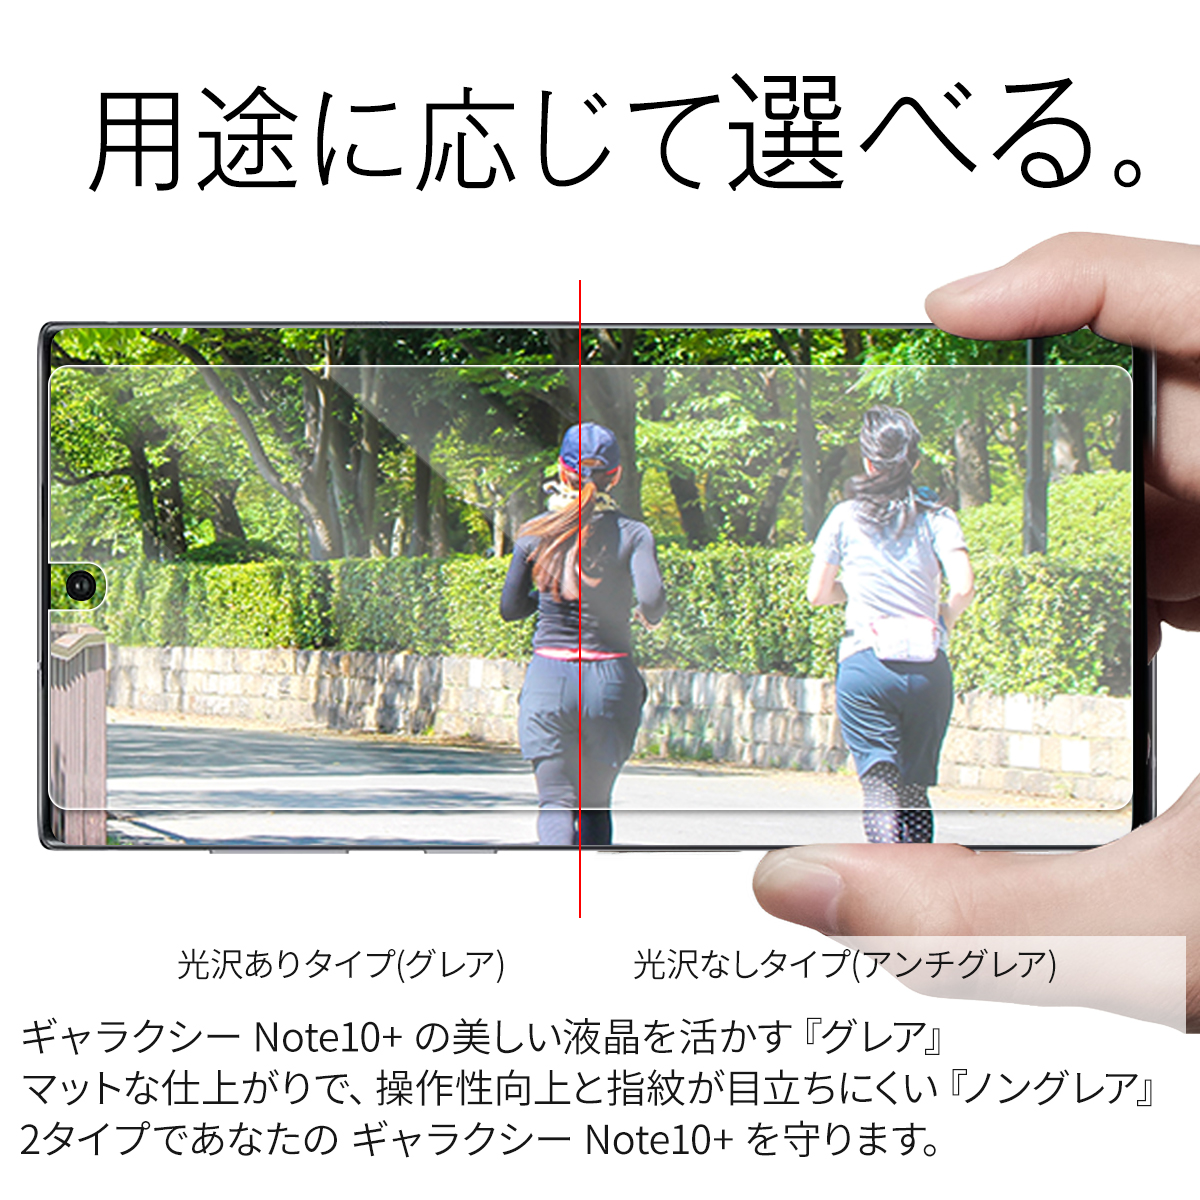 Galaxy Note10+ SC-01M SCV45 液晶保護フィルム